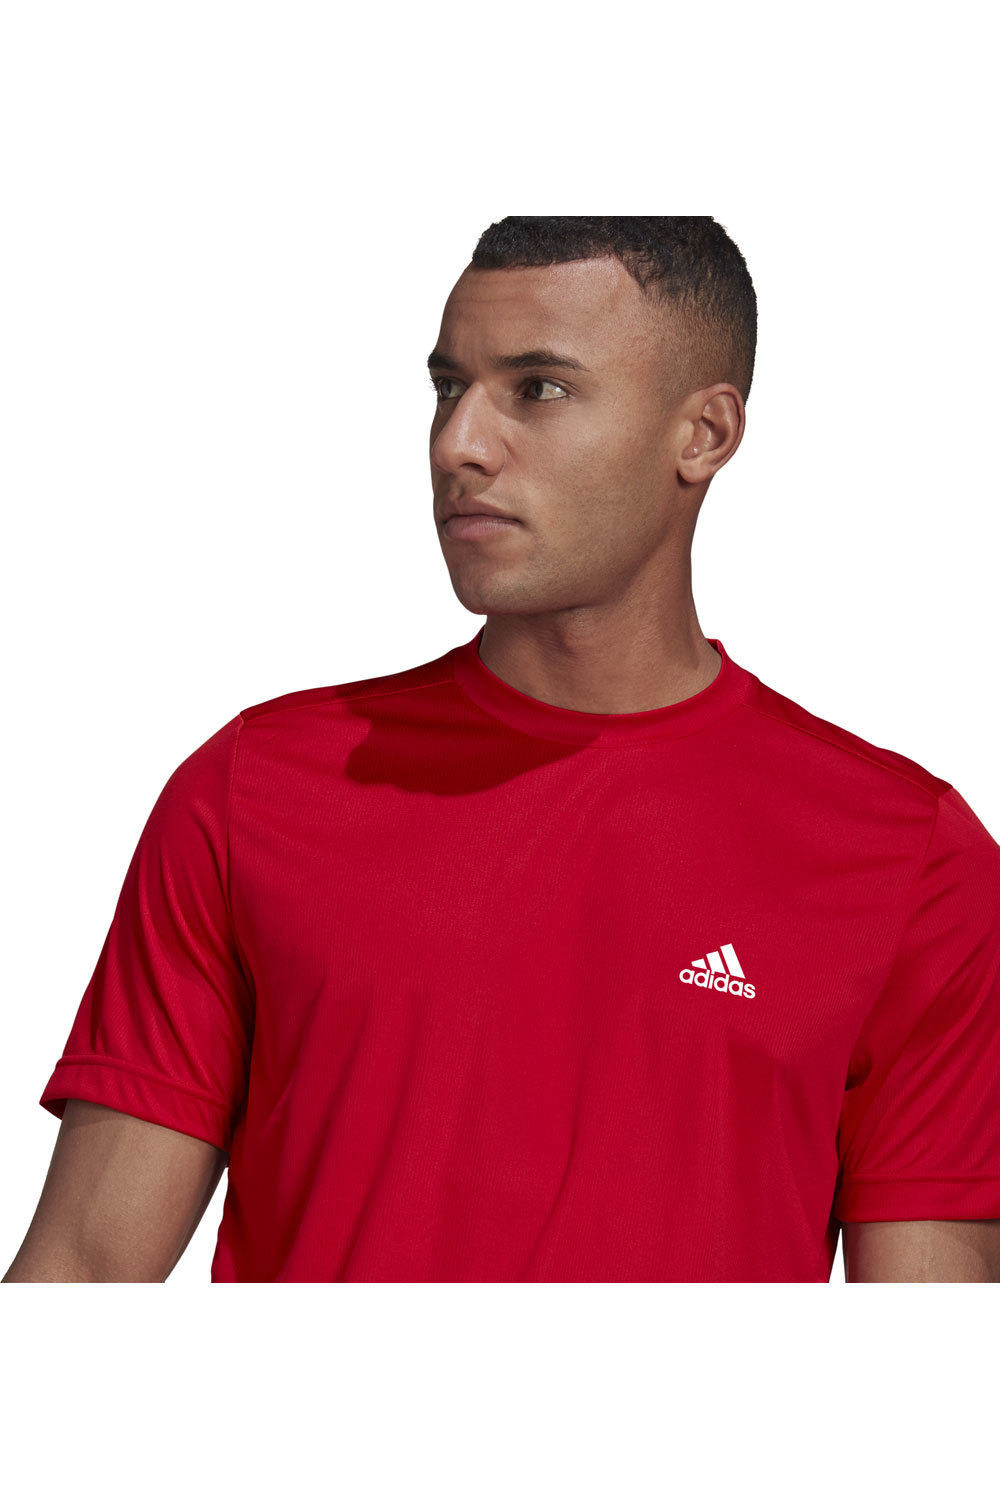 adidas camiseta fitness hombre AEROREADY Designed To Move Sport vista detalle